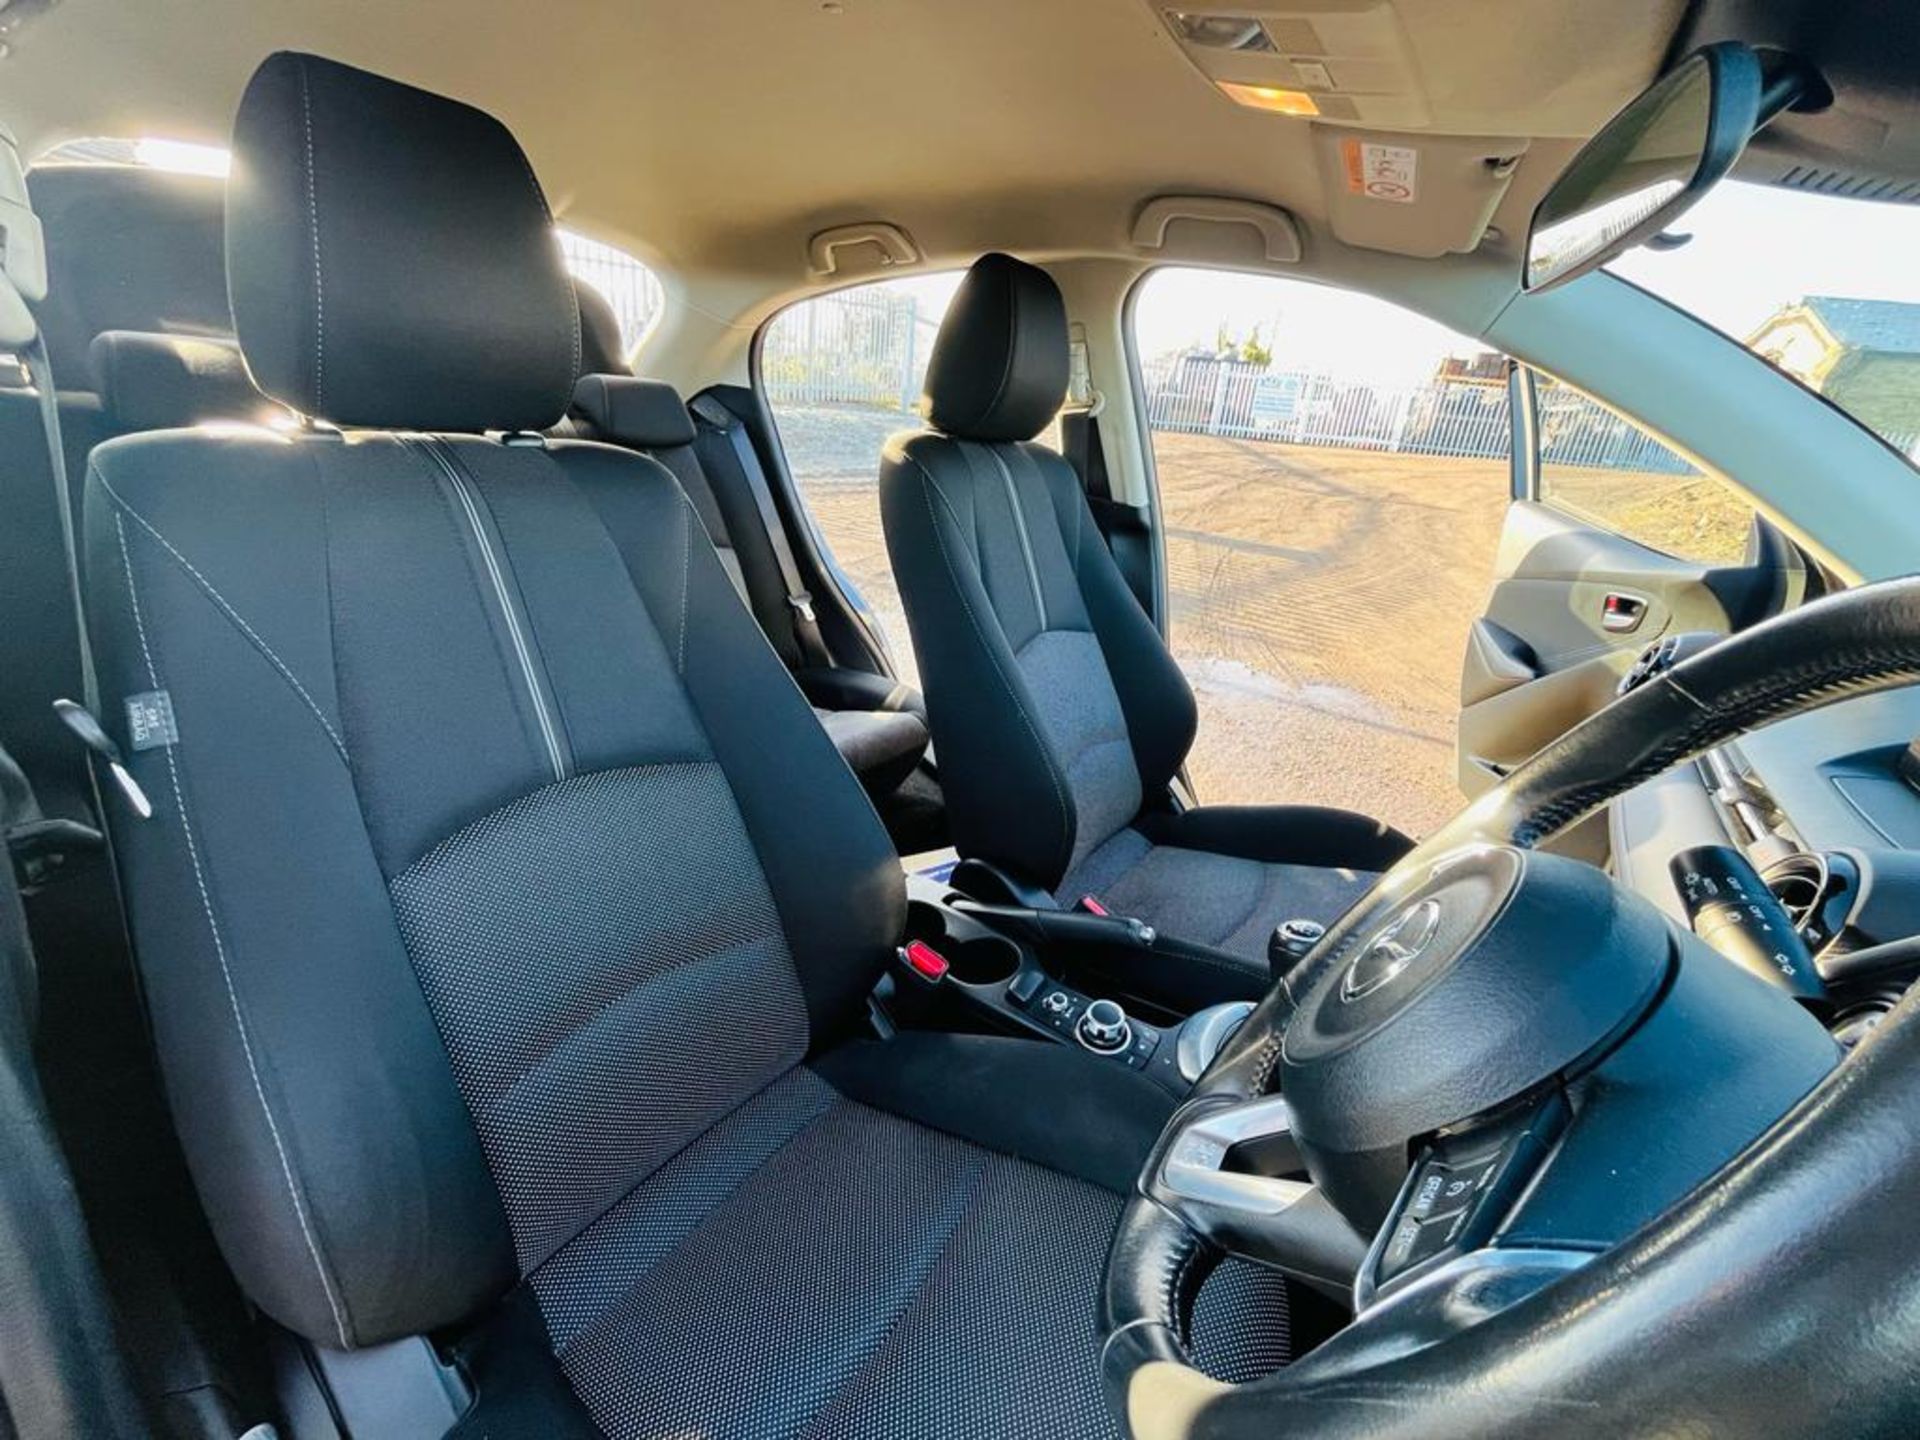 ** ON SALE ** Mazda 2 1.5 90 Sport Nav+ Hatchback 2019 '19 Reg' A/C - ULEZ Compliant - Image 13 of 35